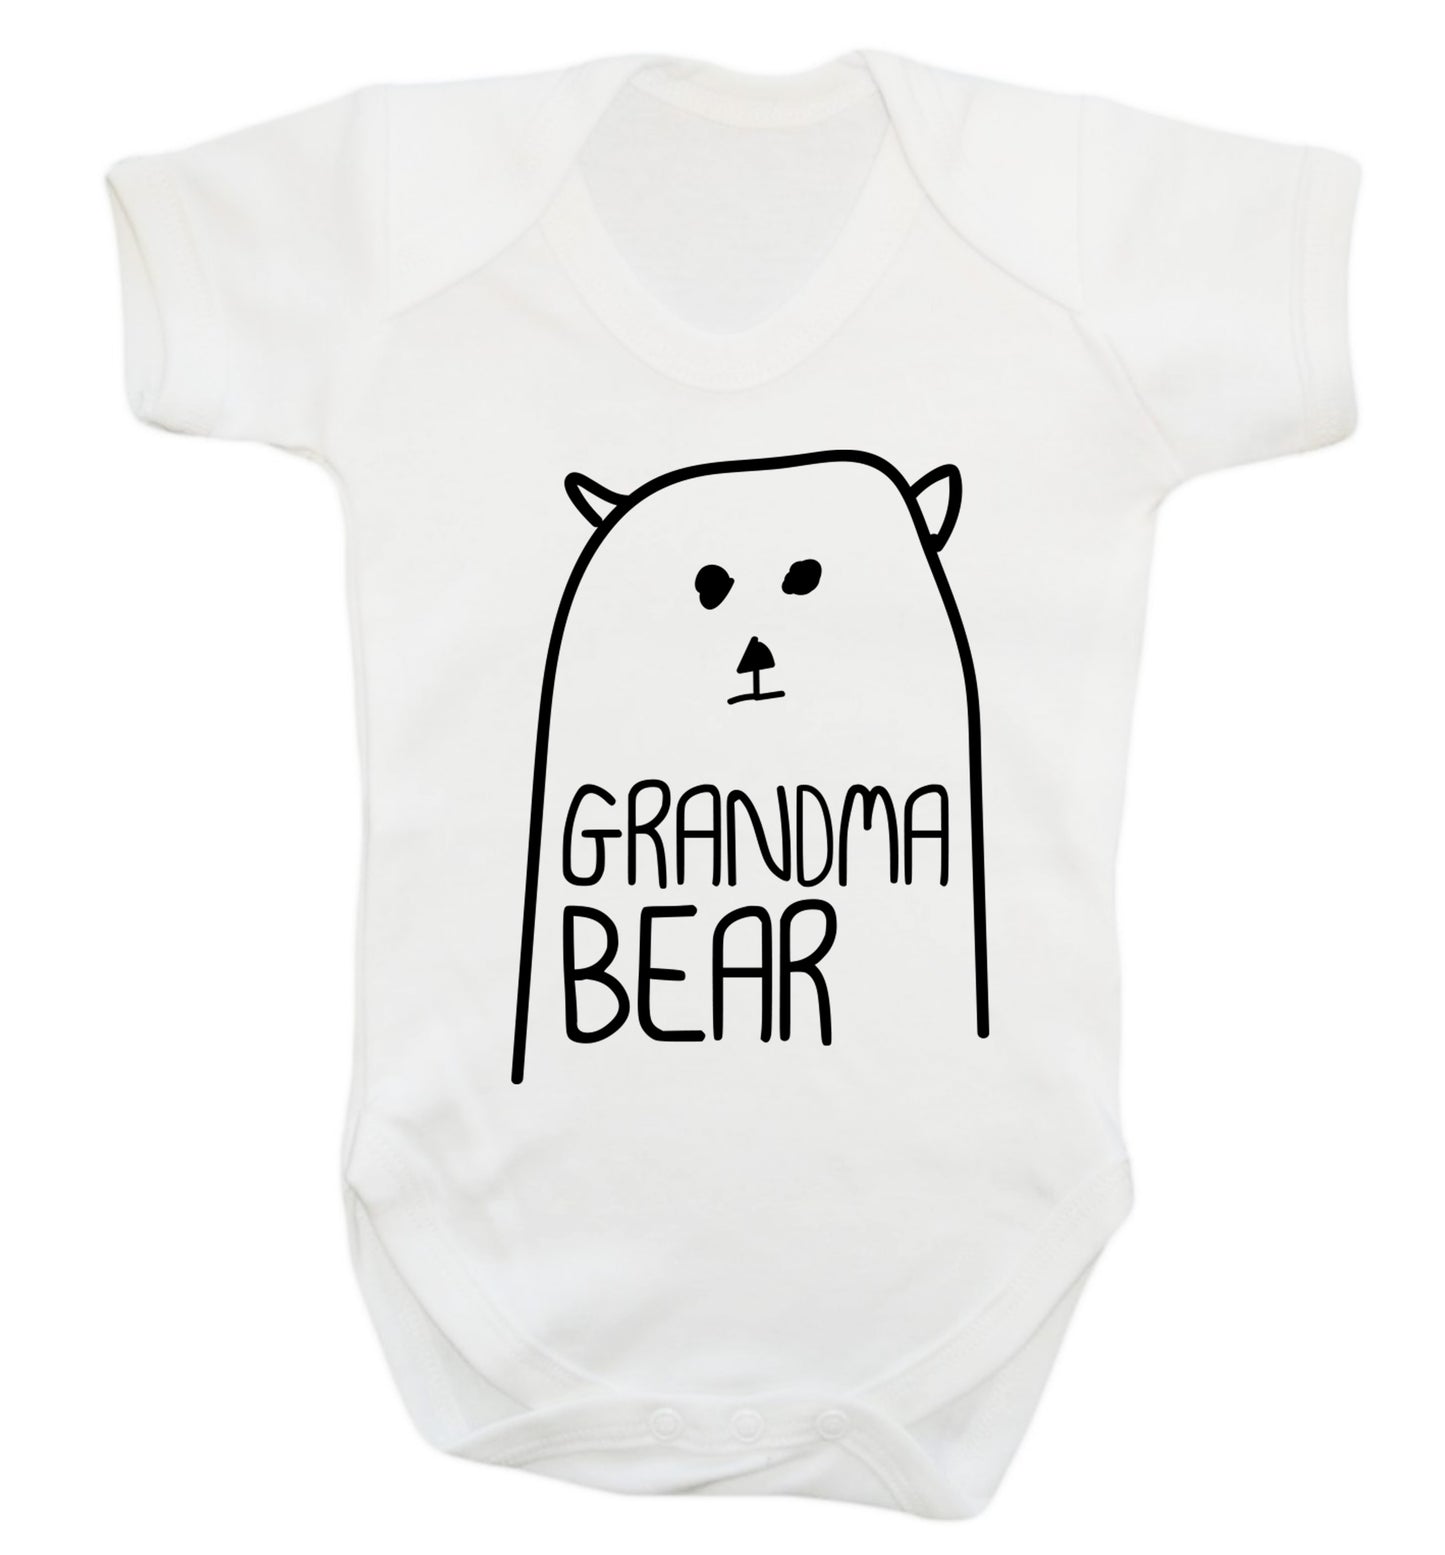 Grandma bear Baby Vest white 18-24 months